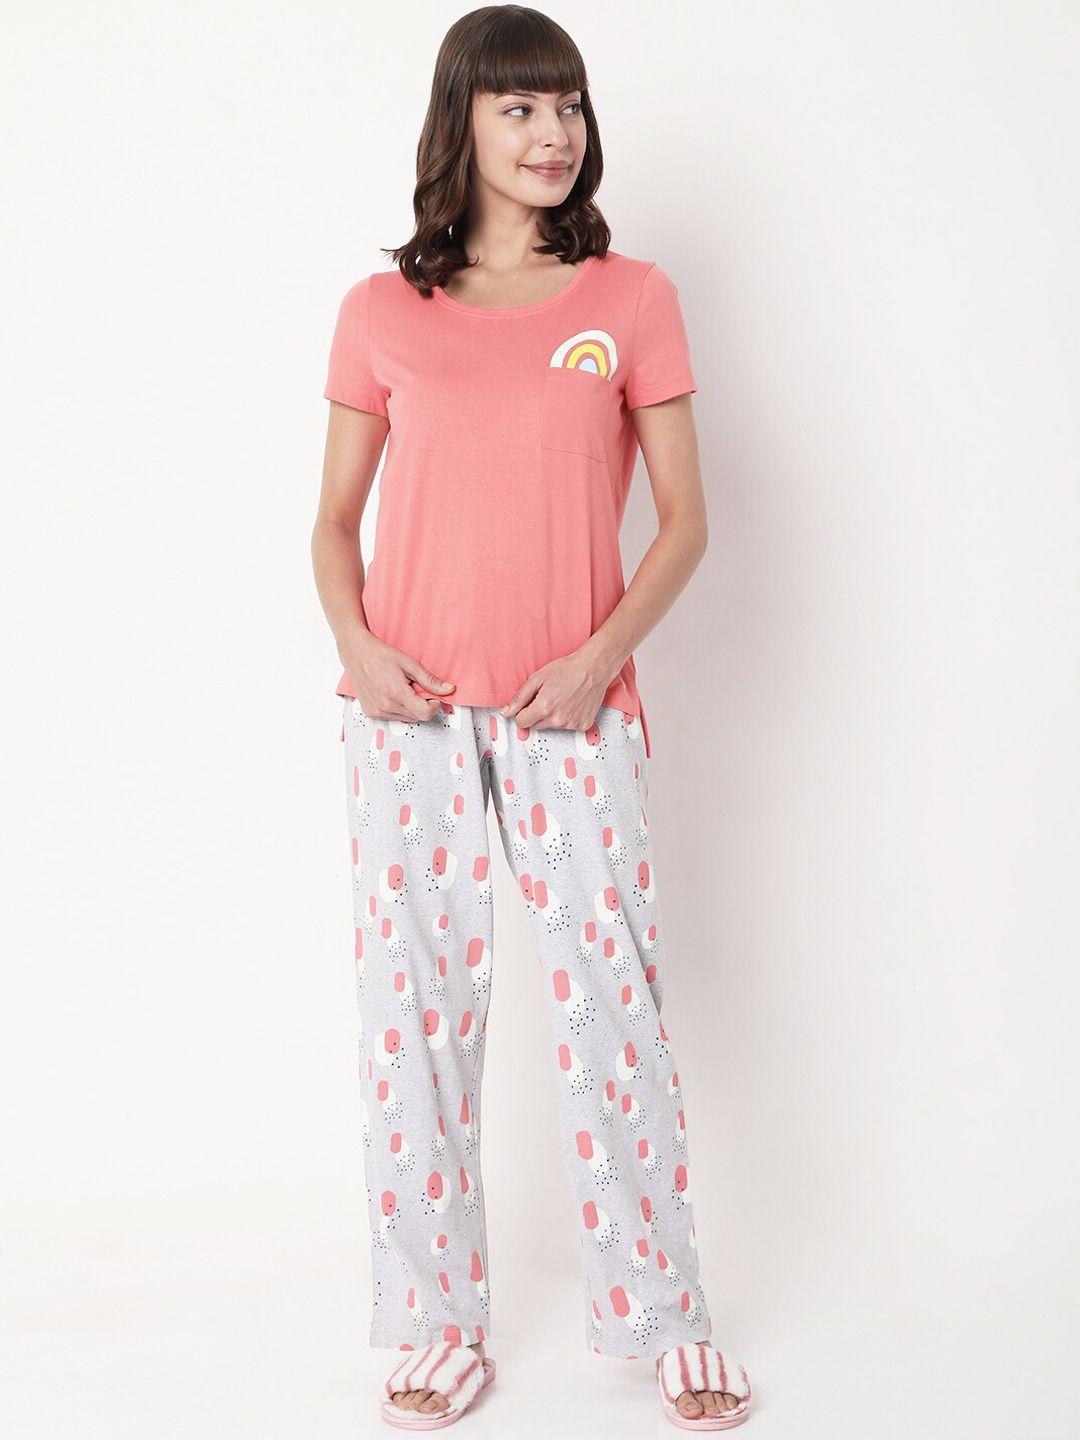 vero moda ease women pink & white printed night suit